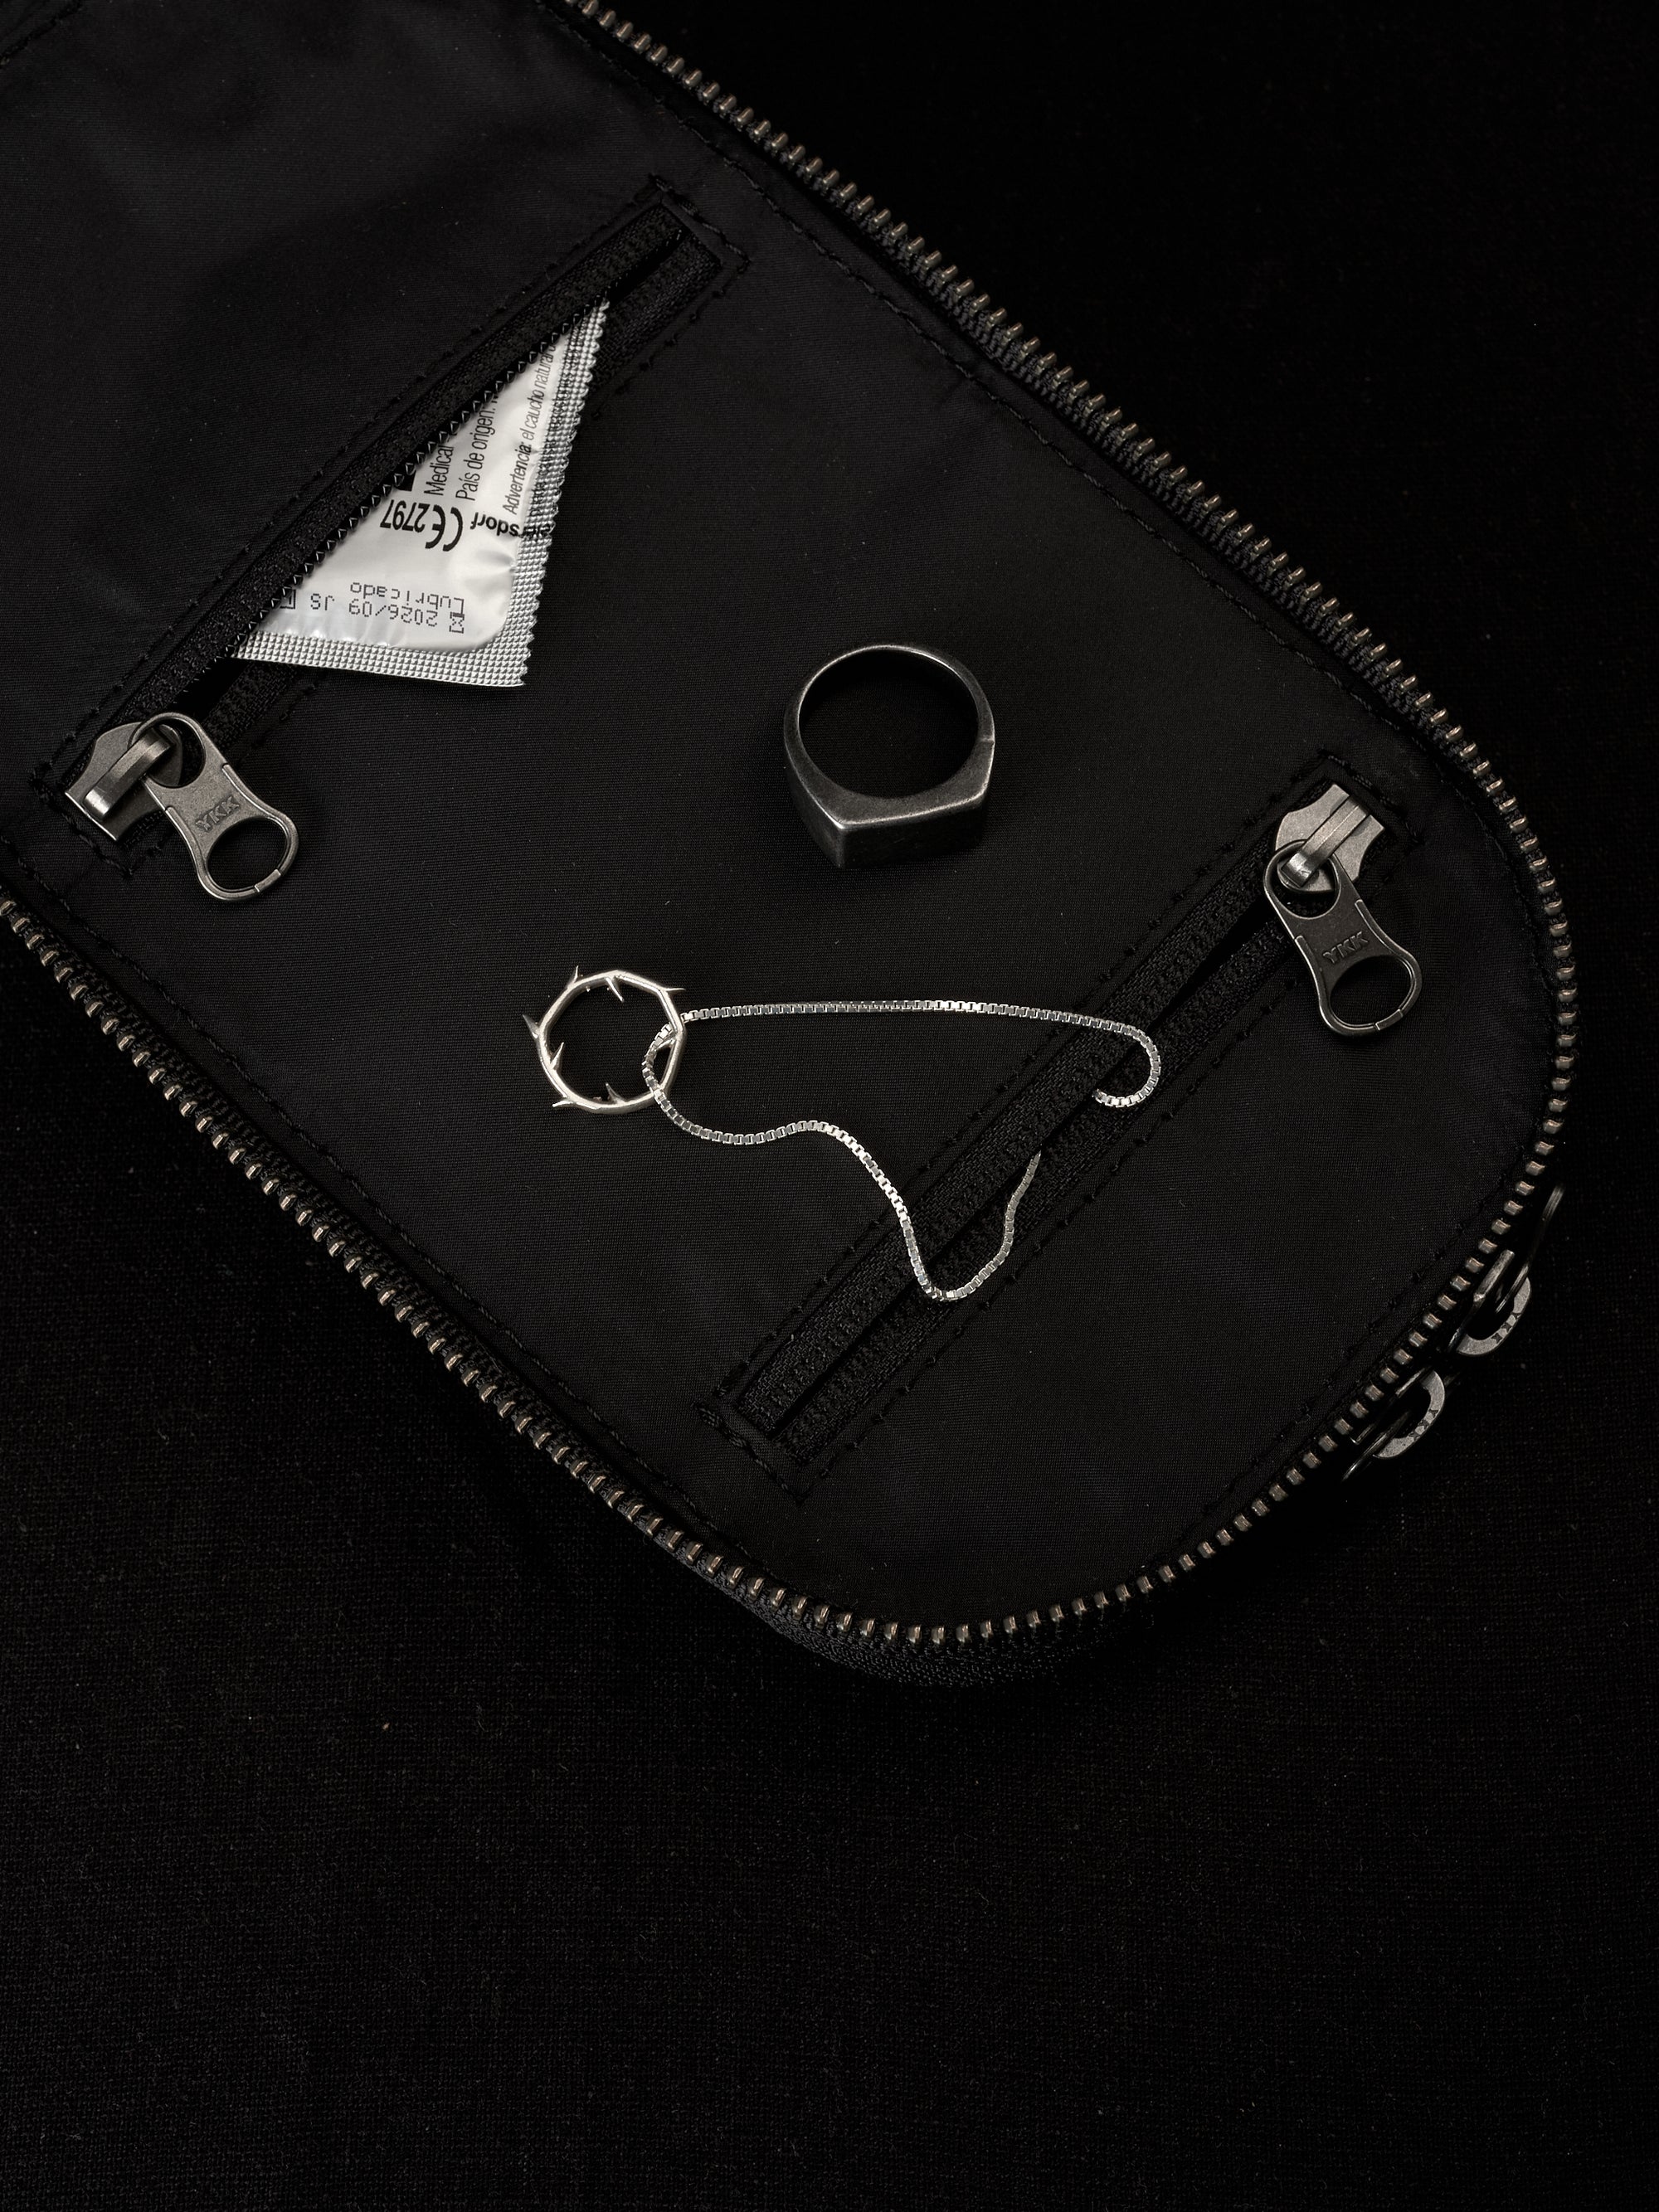 Small pocket dopp kit bag by Capra Leather